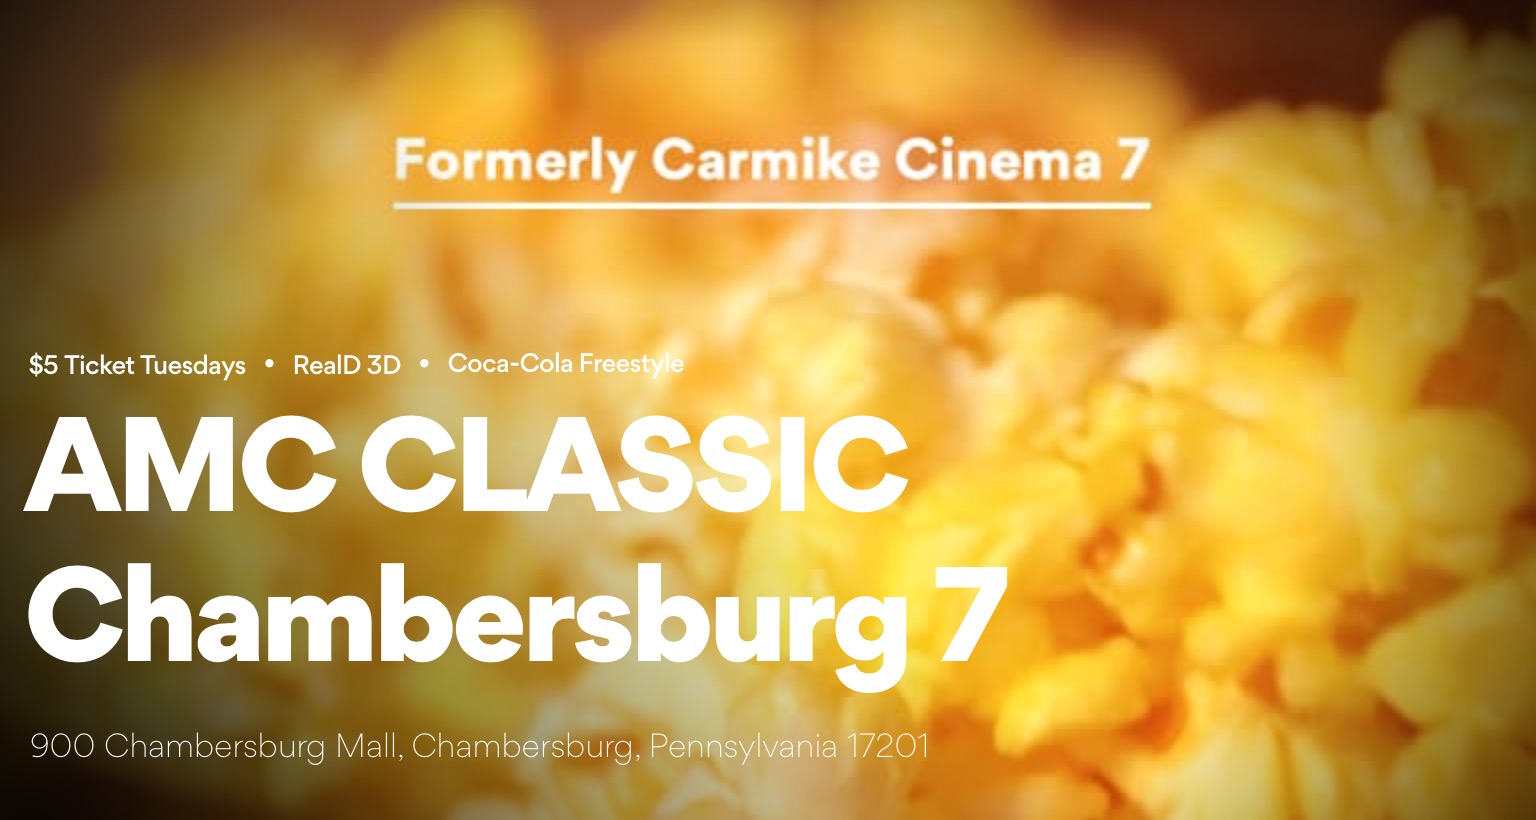 $5 Movie Ticket Tuesday at AMC Classic Chambersburg 7 | Ship Saves